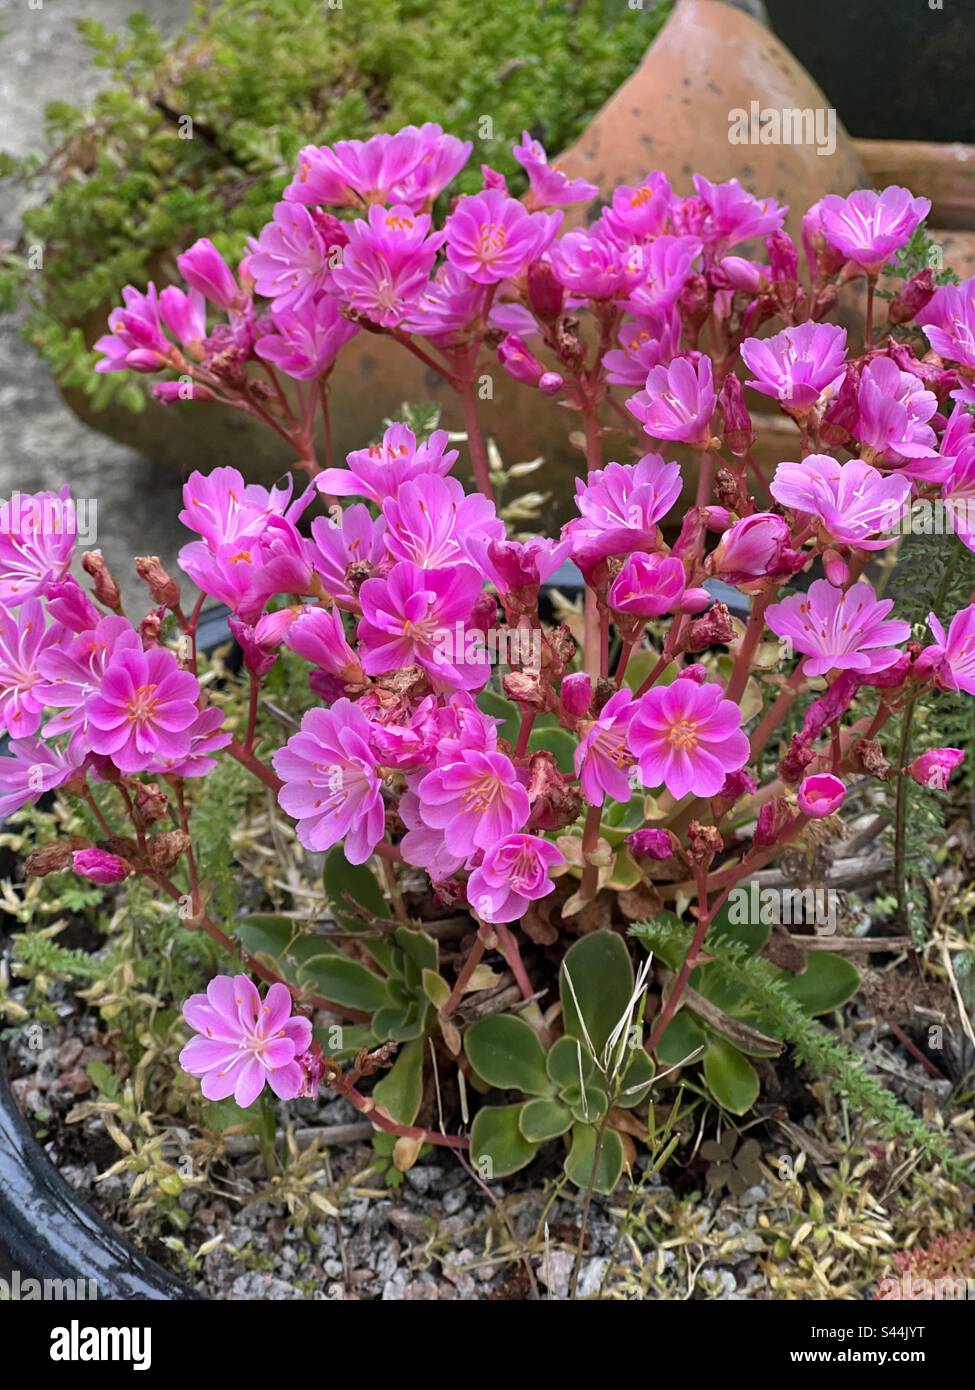 lewisia plant - vibrant pink flowers Stock Photo